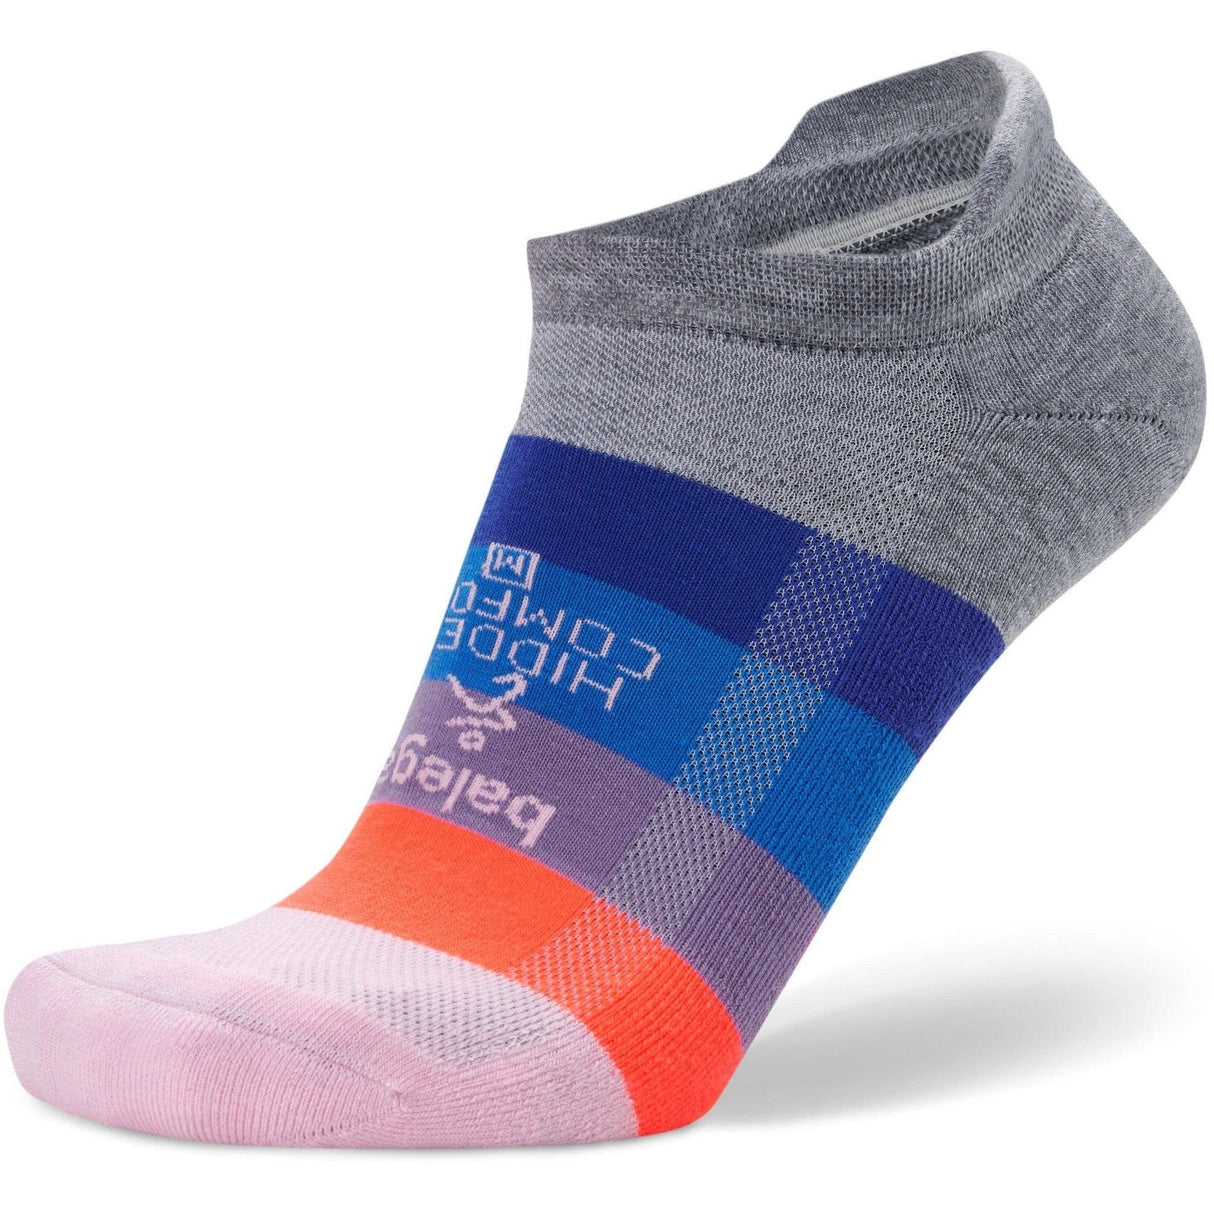 Balega Hidden Comfort No Show Tab Socks - Clearance  -  Large / Midgray/Swift Violet